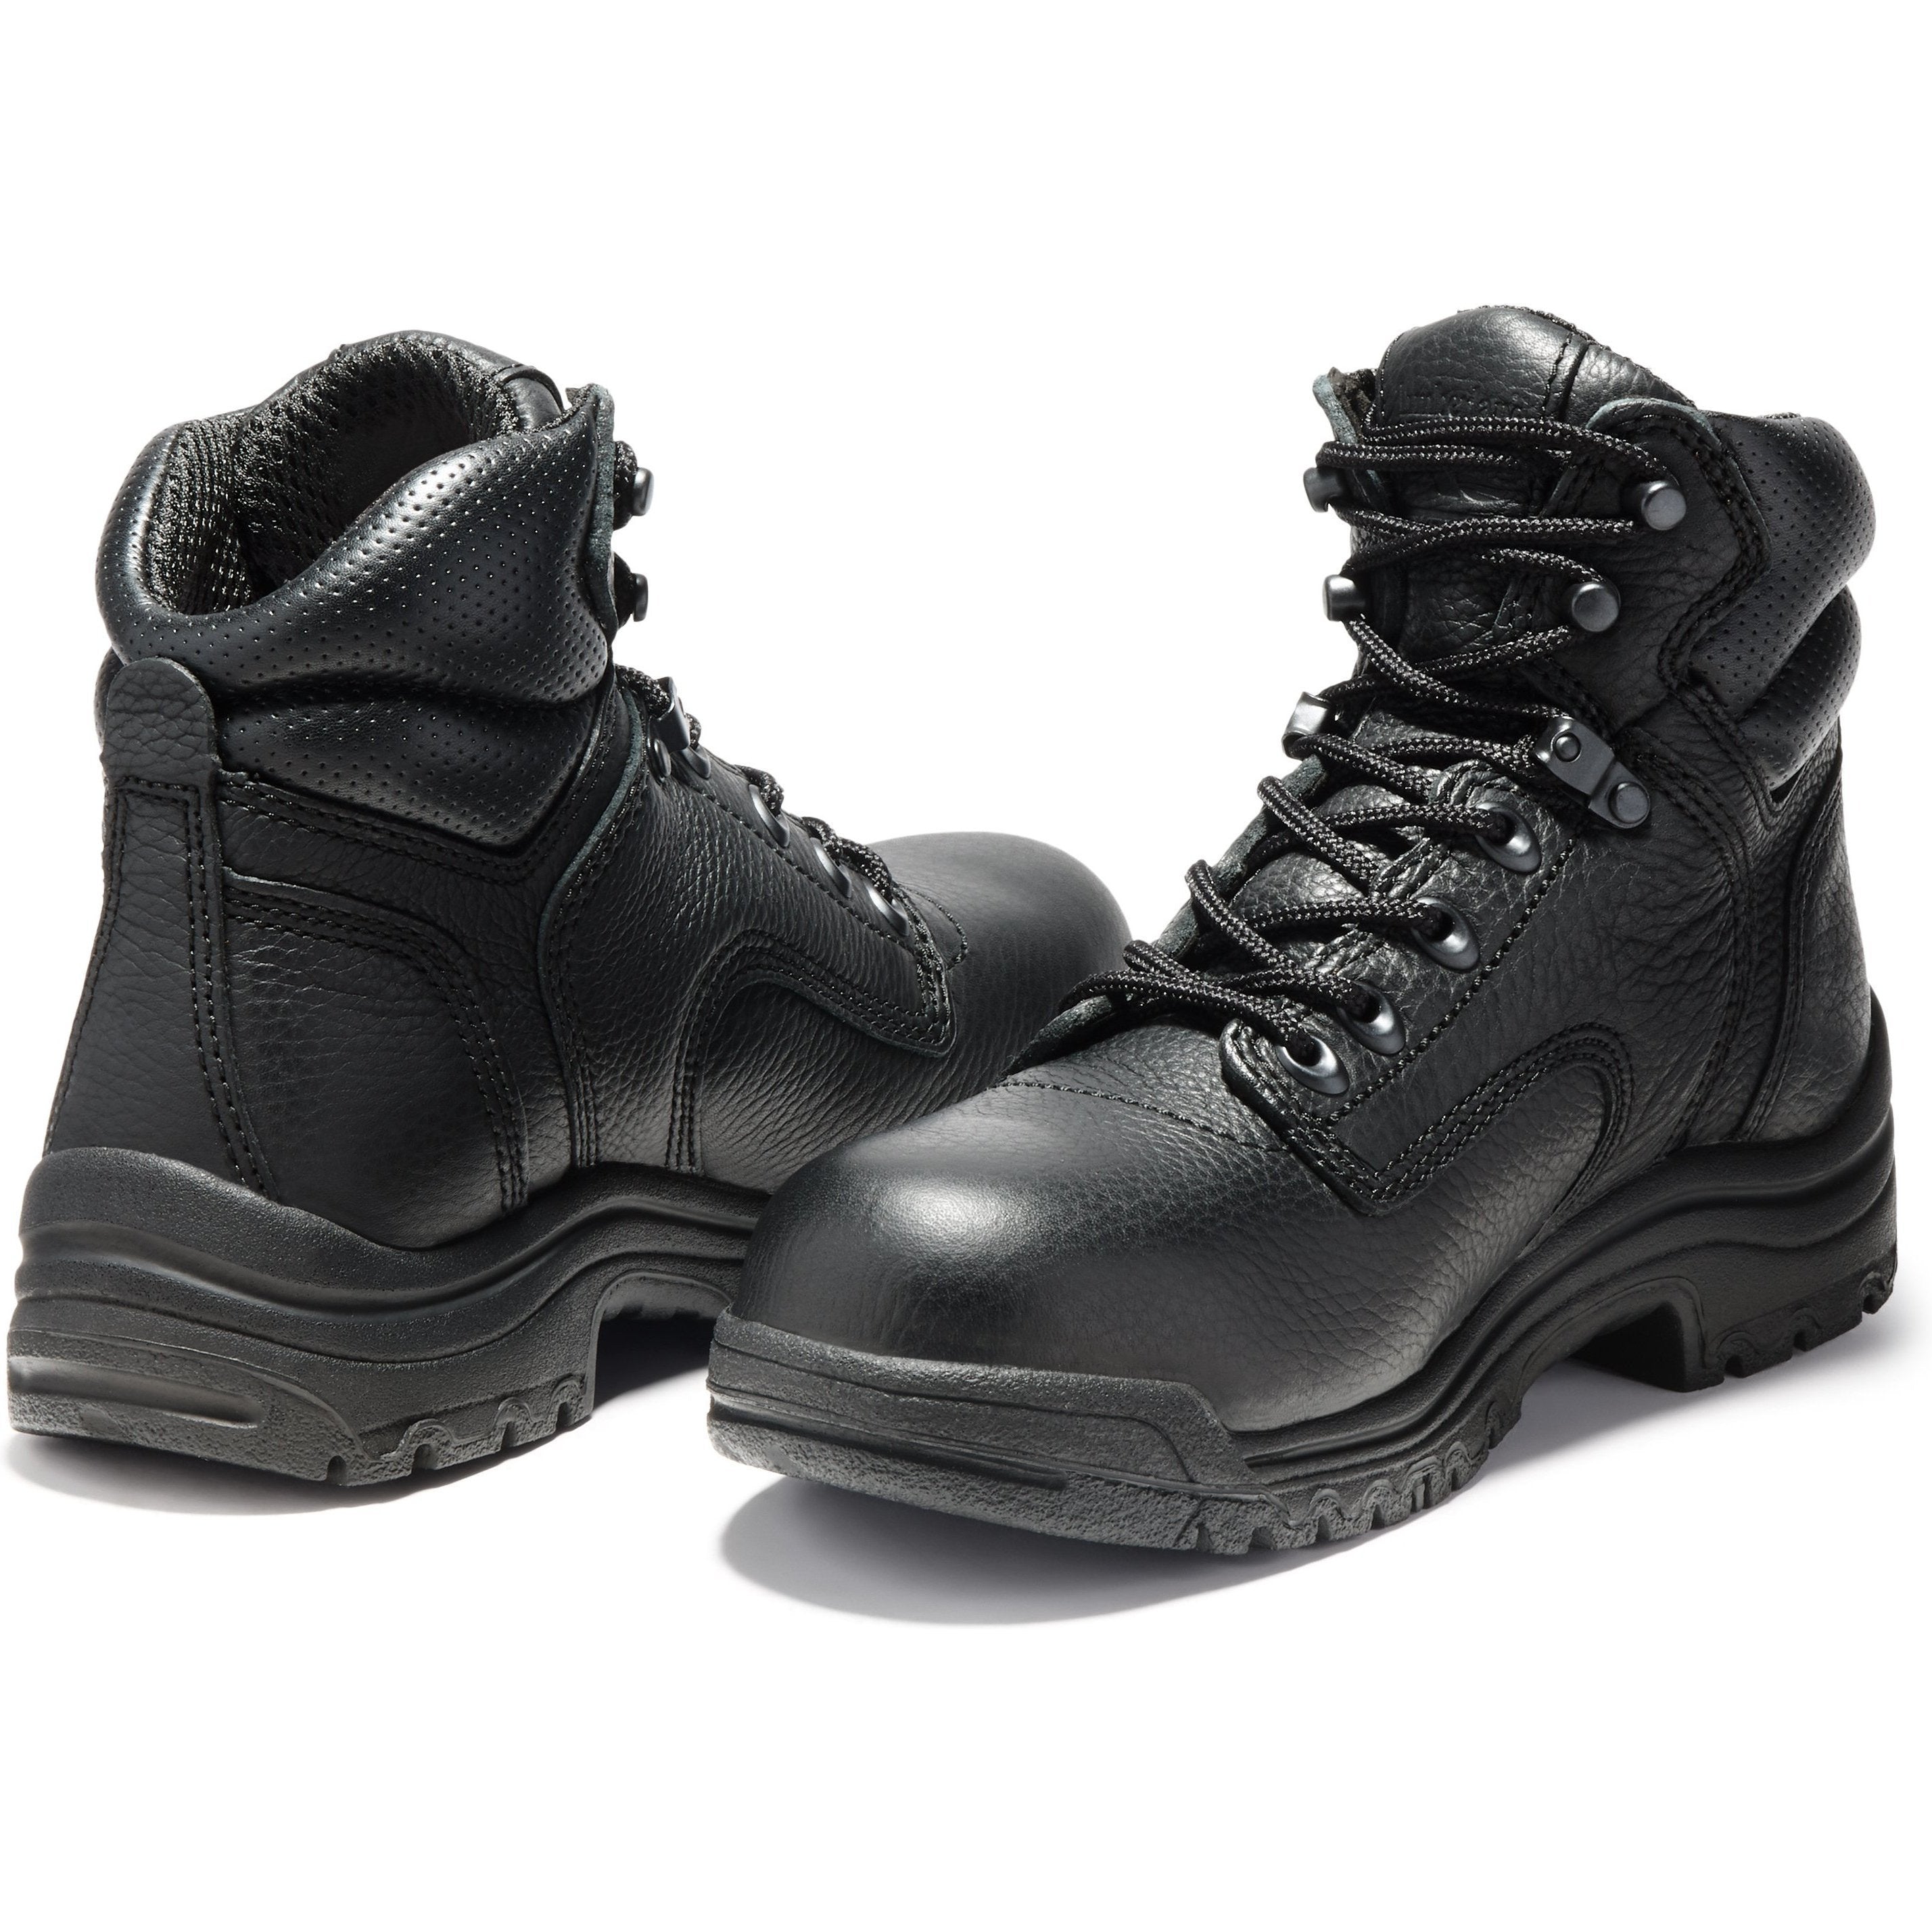 Timberland PRO Women's TITAN 6" Alloy Toe Work Boot Black TB172399001  - Overlook Boots